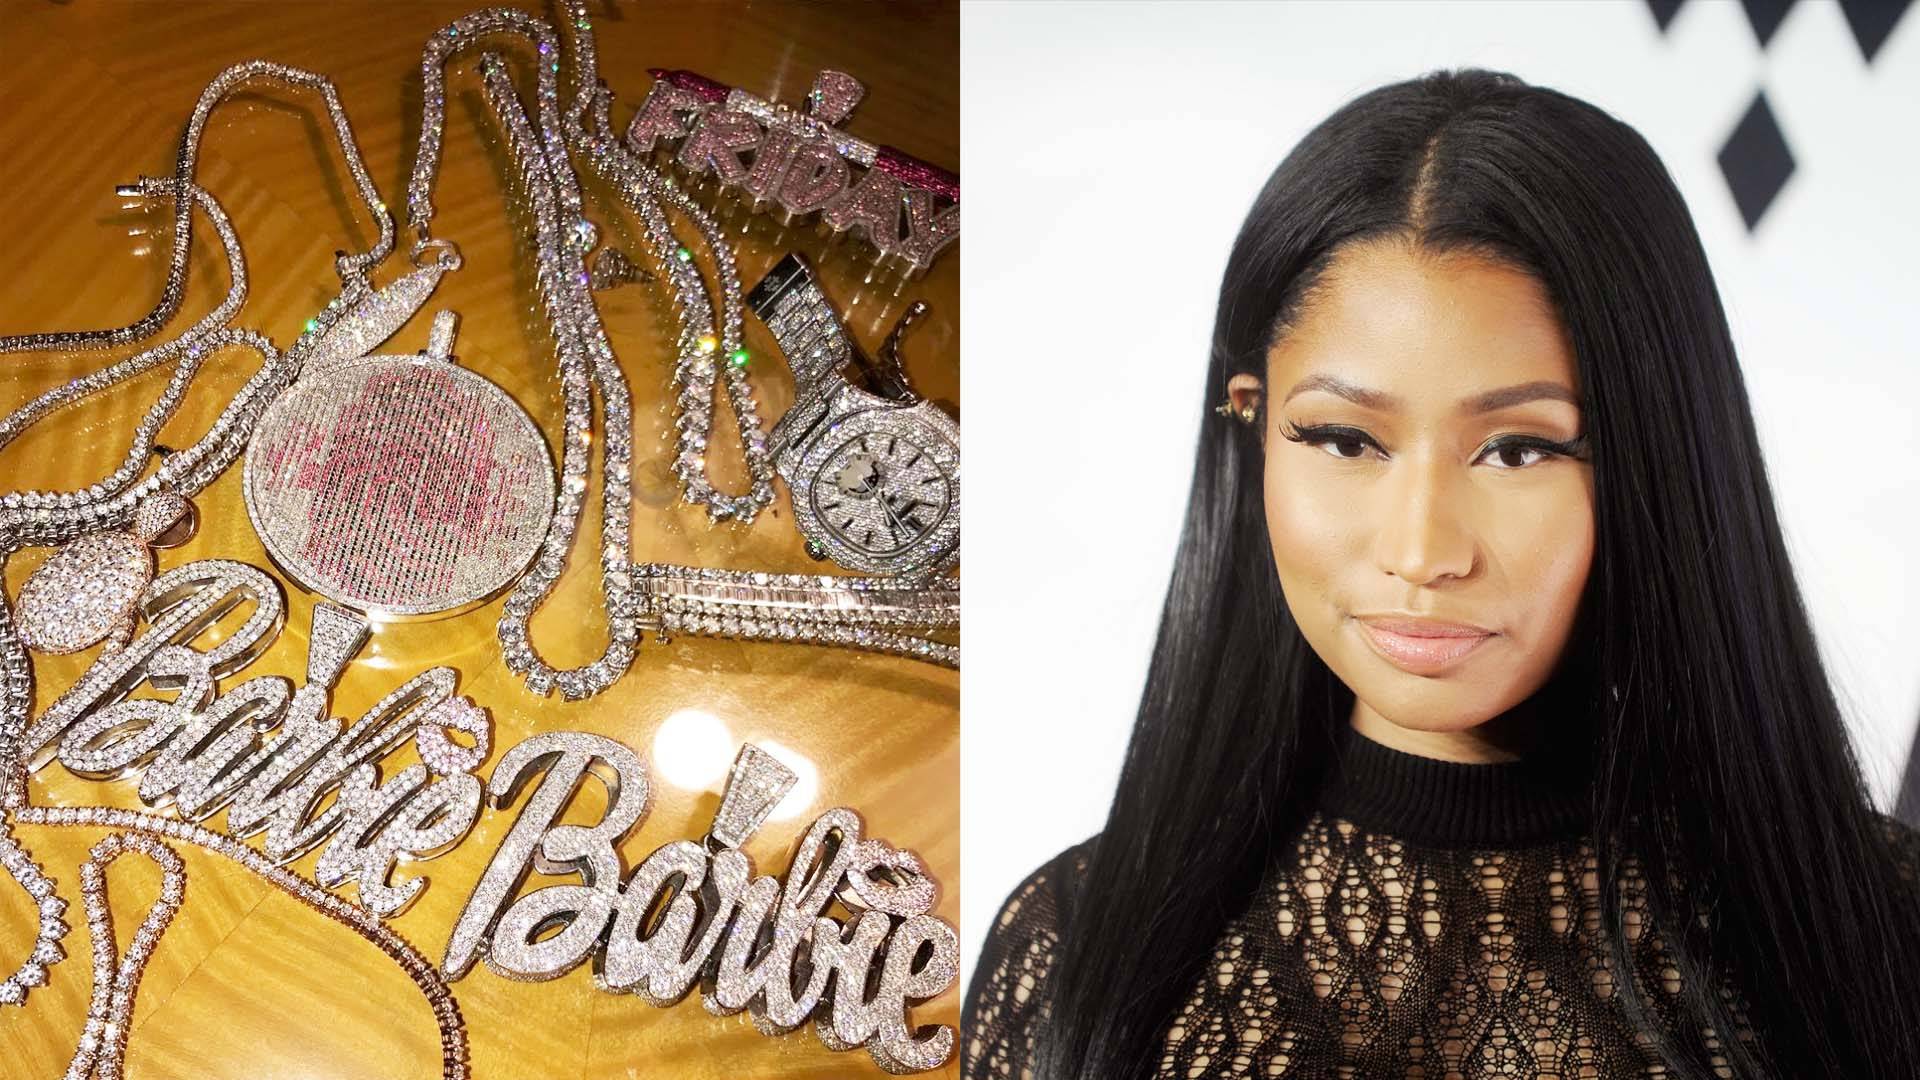 Meet the Young Indian Jewelry Designer Behind Nicki Minaj's